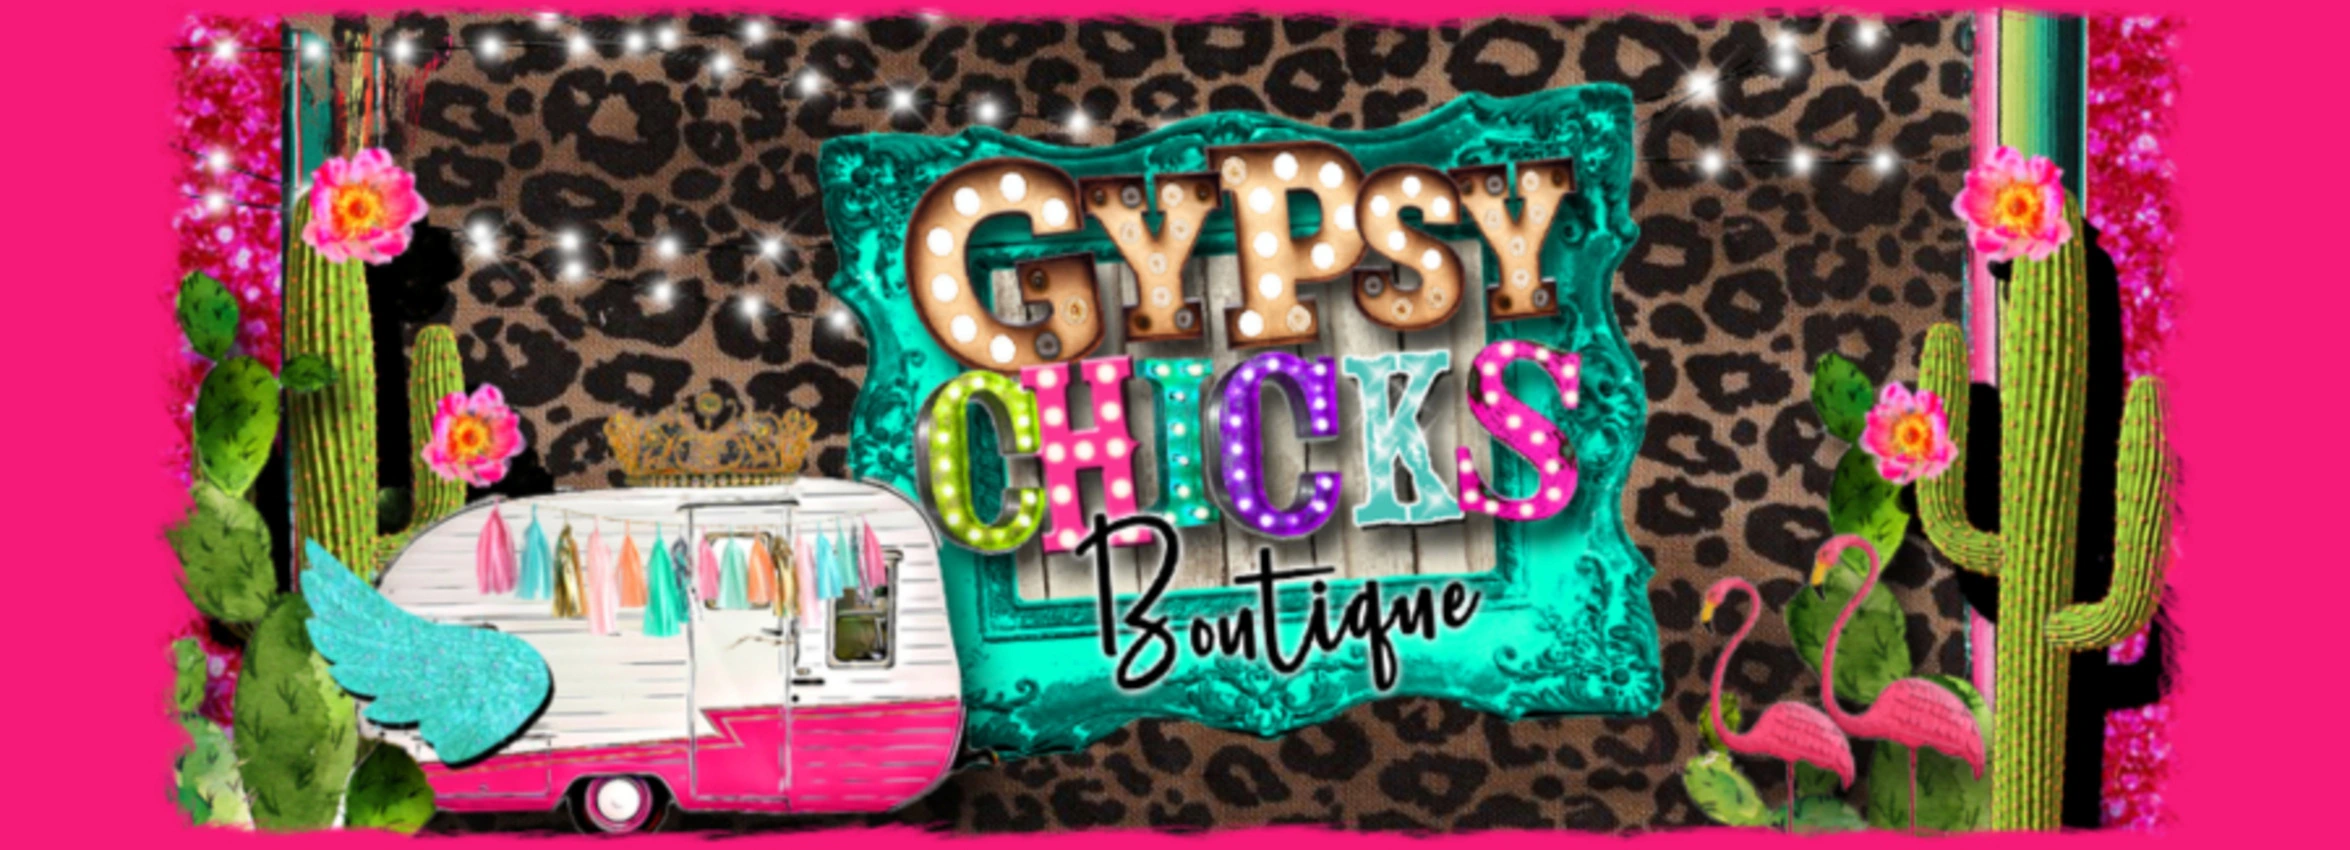 Gypsy-Chicks-Boutique_Desktop_ET